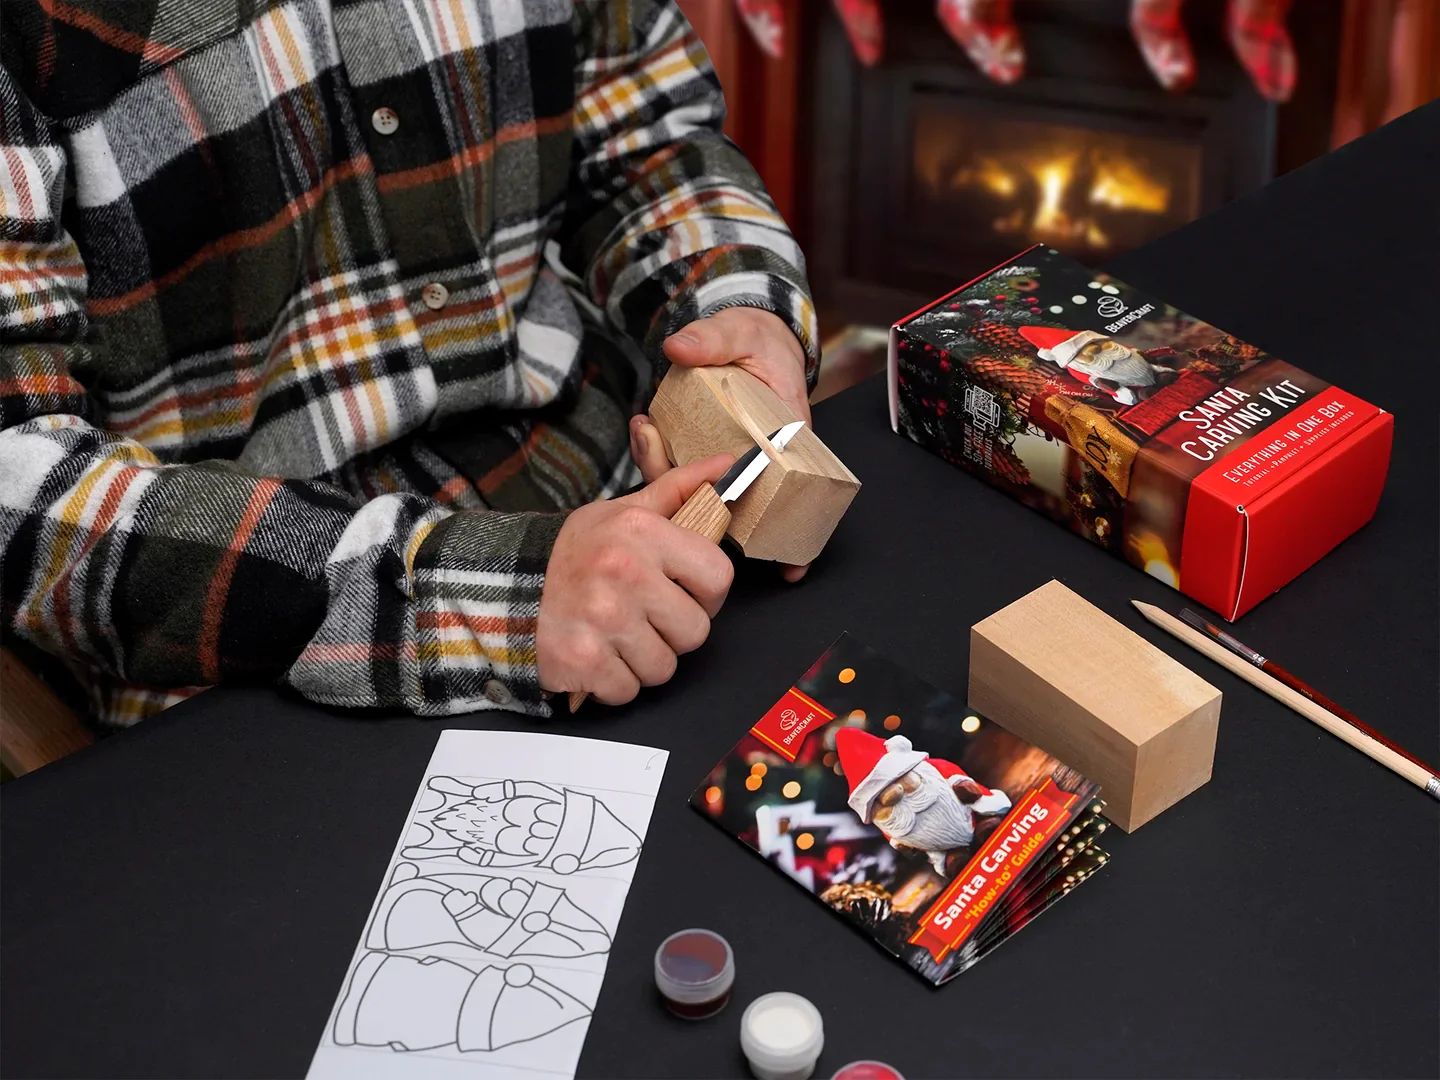 BeaverCraft Santa Carving Kit by Woodcraft